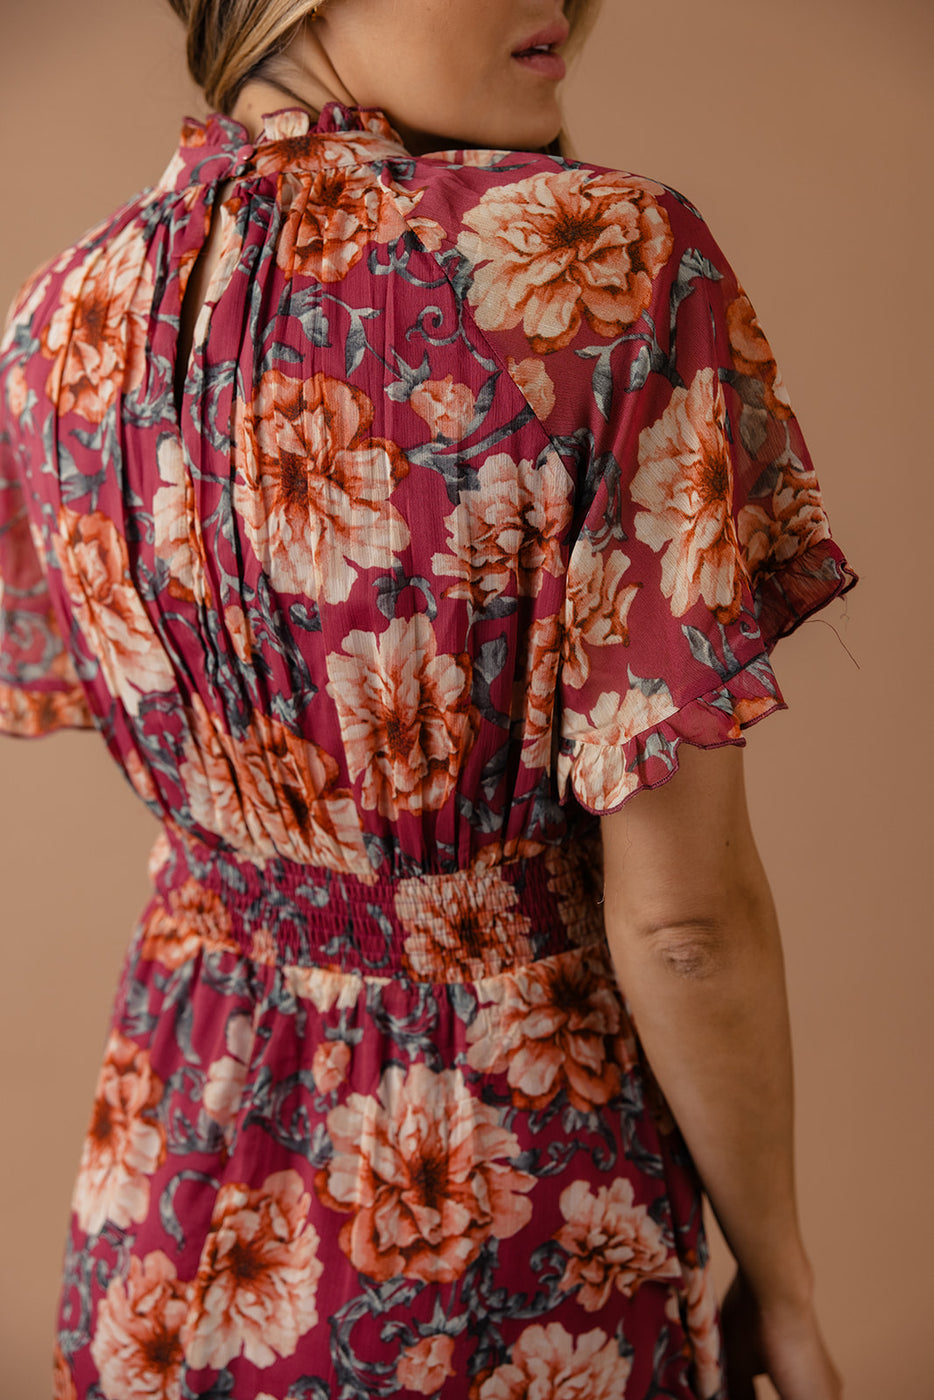 a woman wearing a floral dress